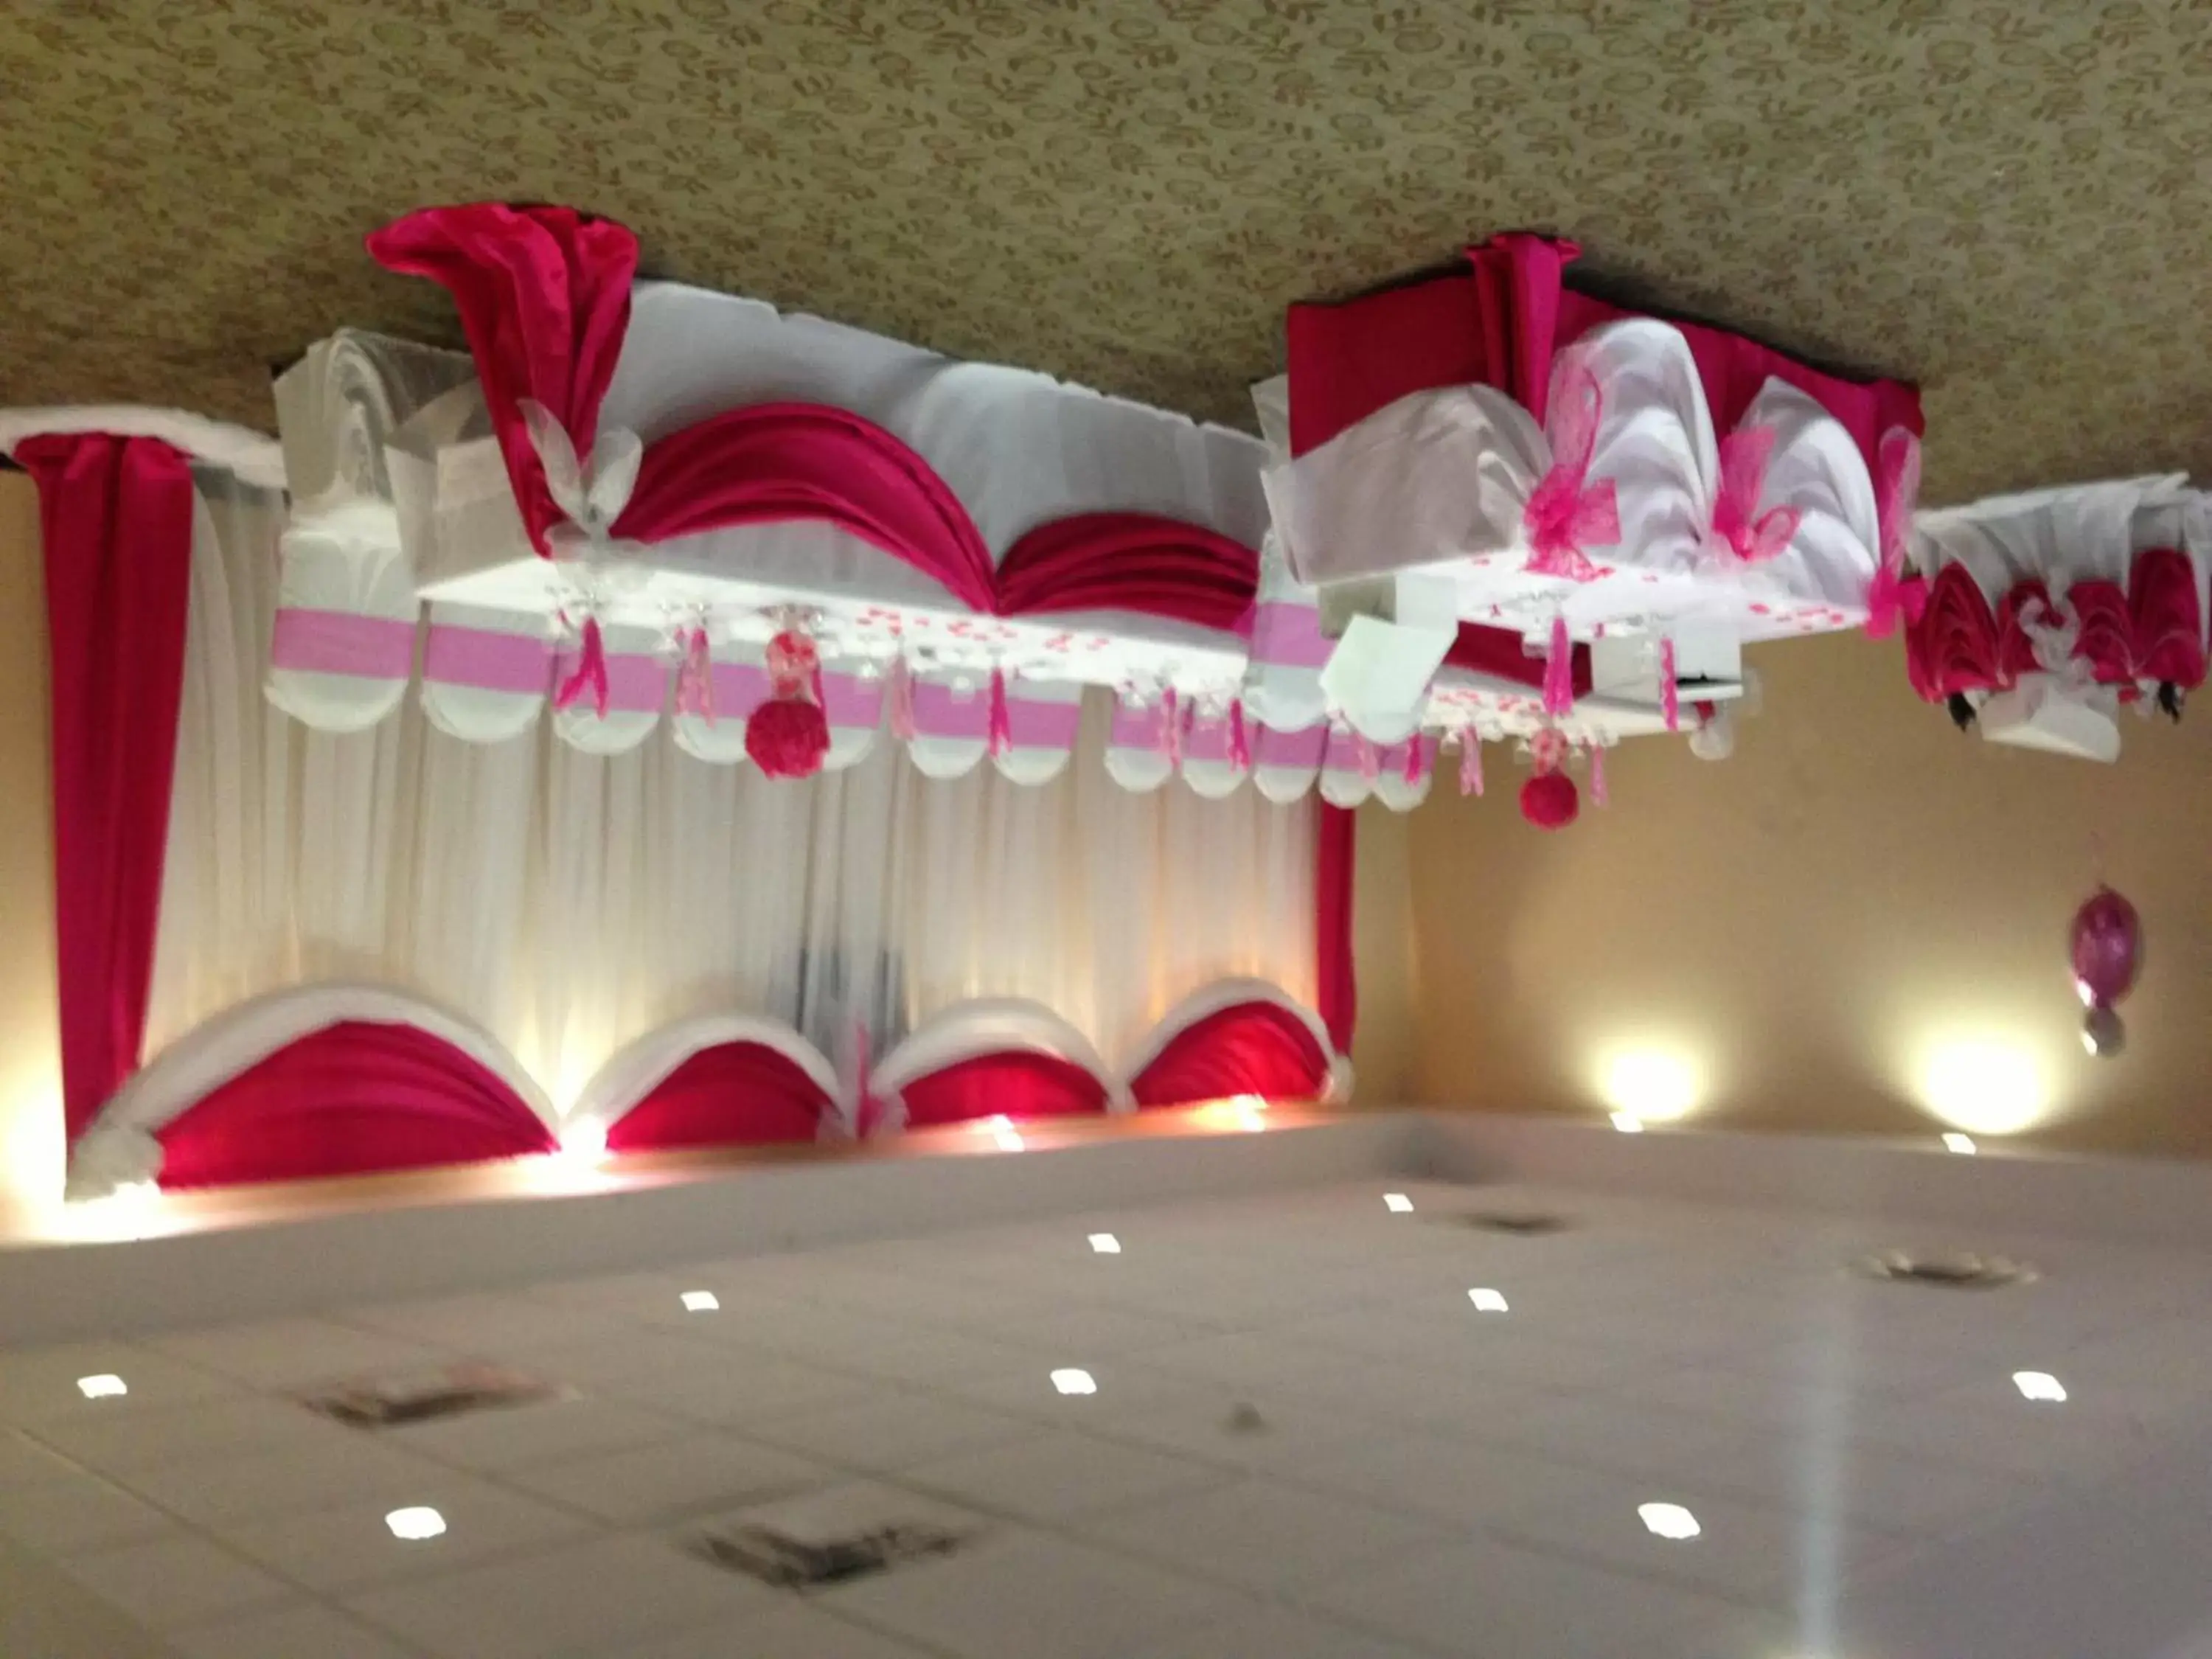 Banquet/Function facilities, Banquet Facilities in Days Inn by Wyndham Brampton